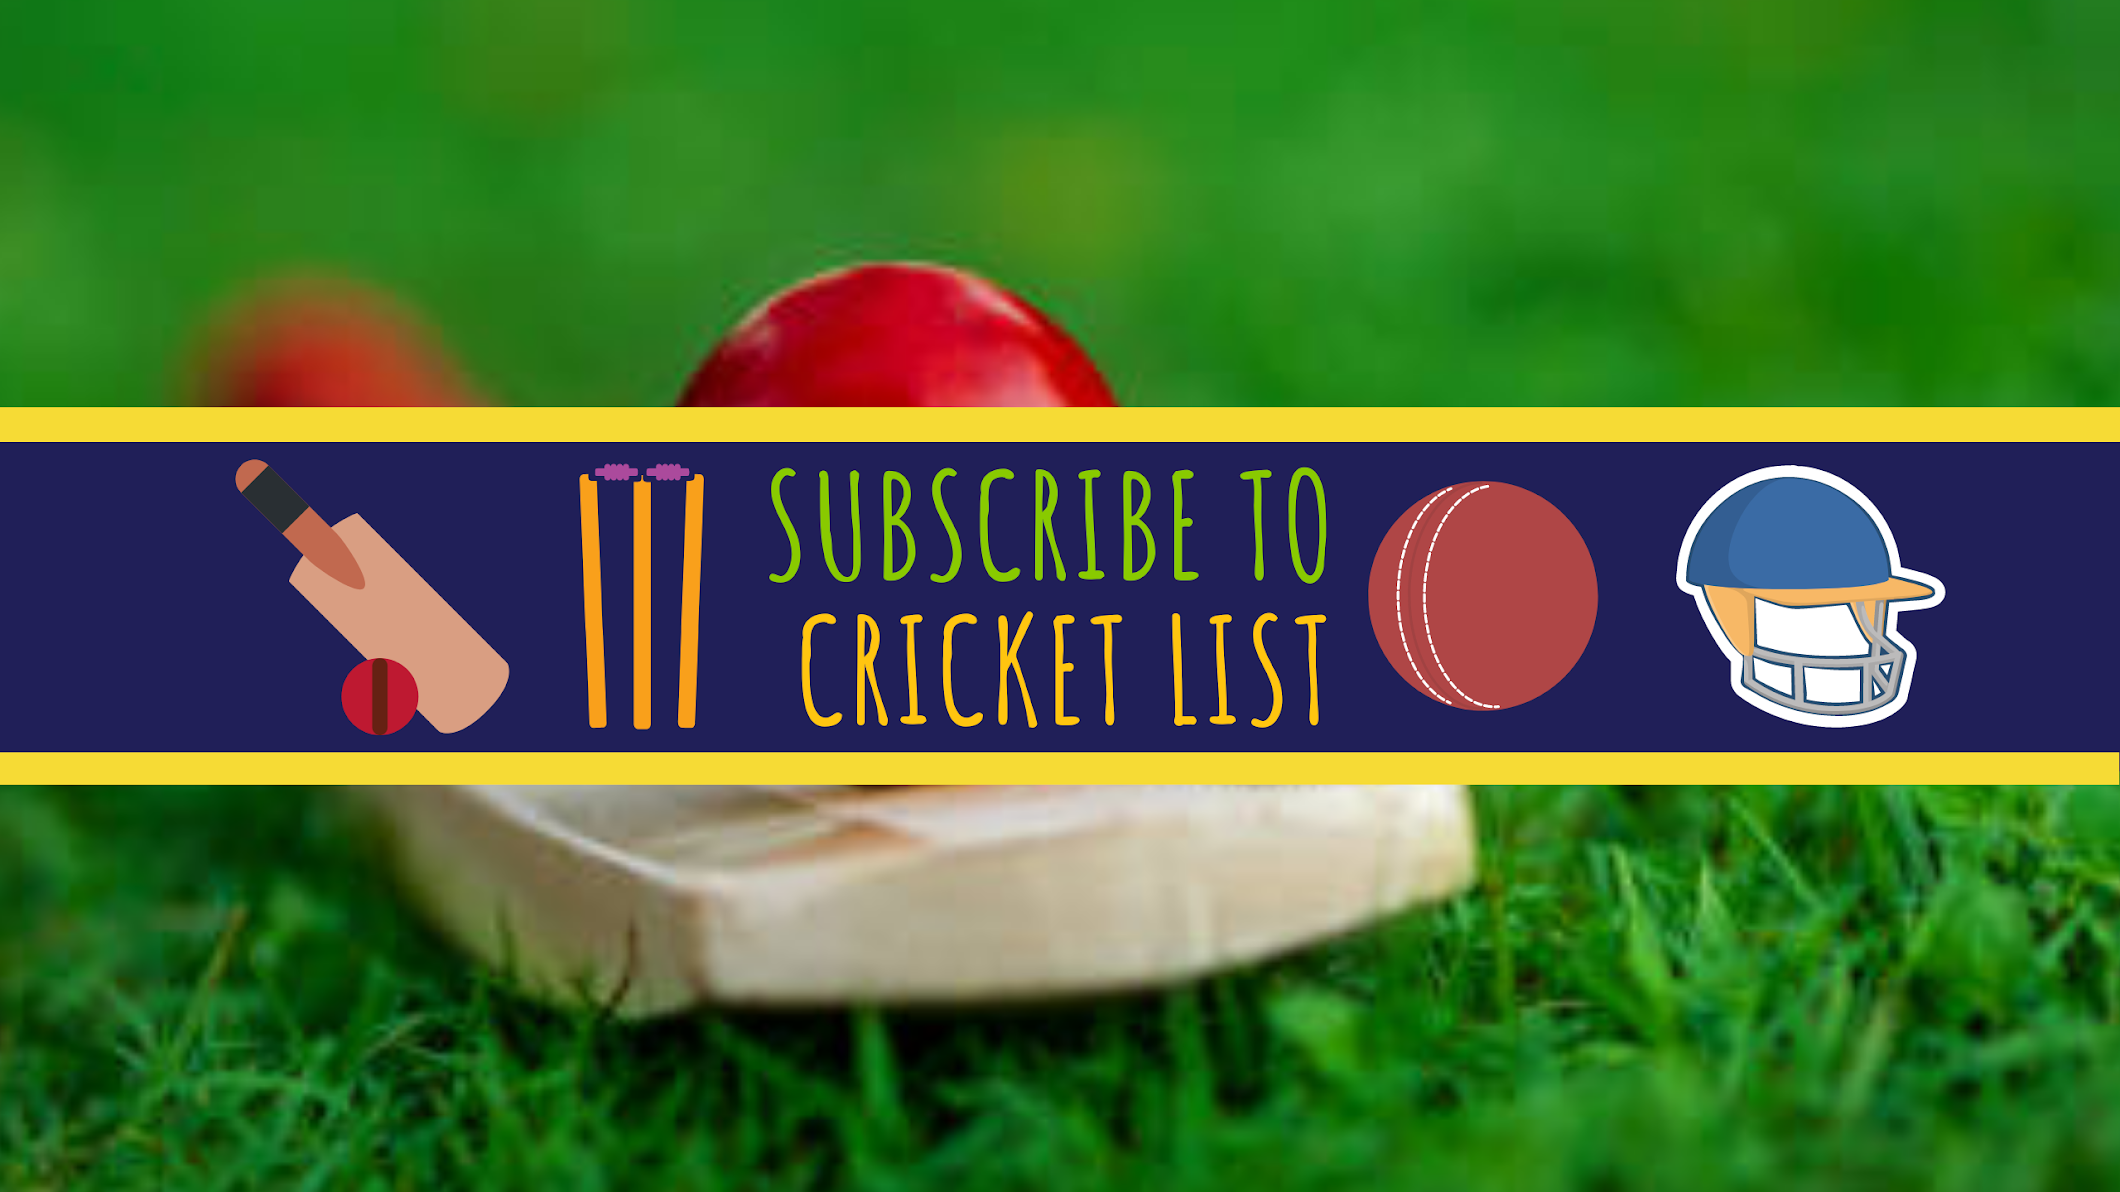 Cricket List